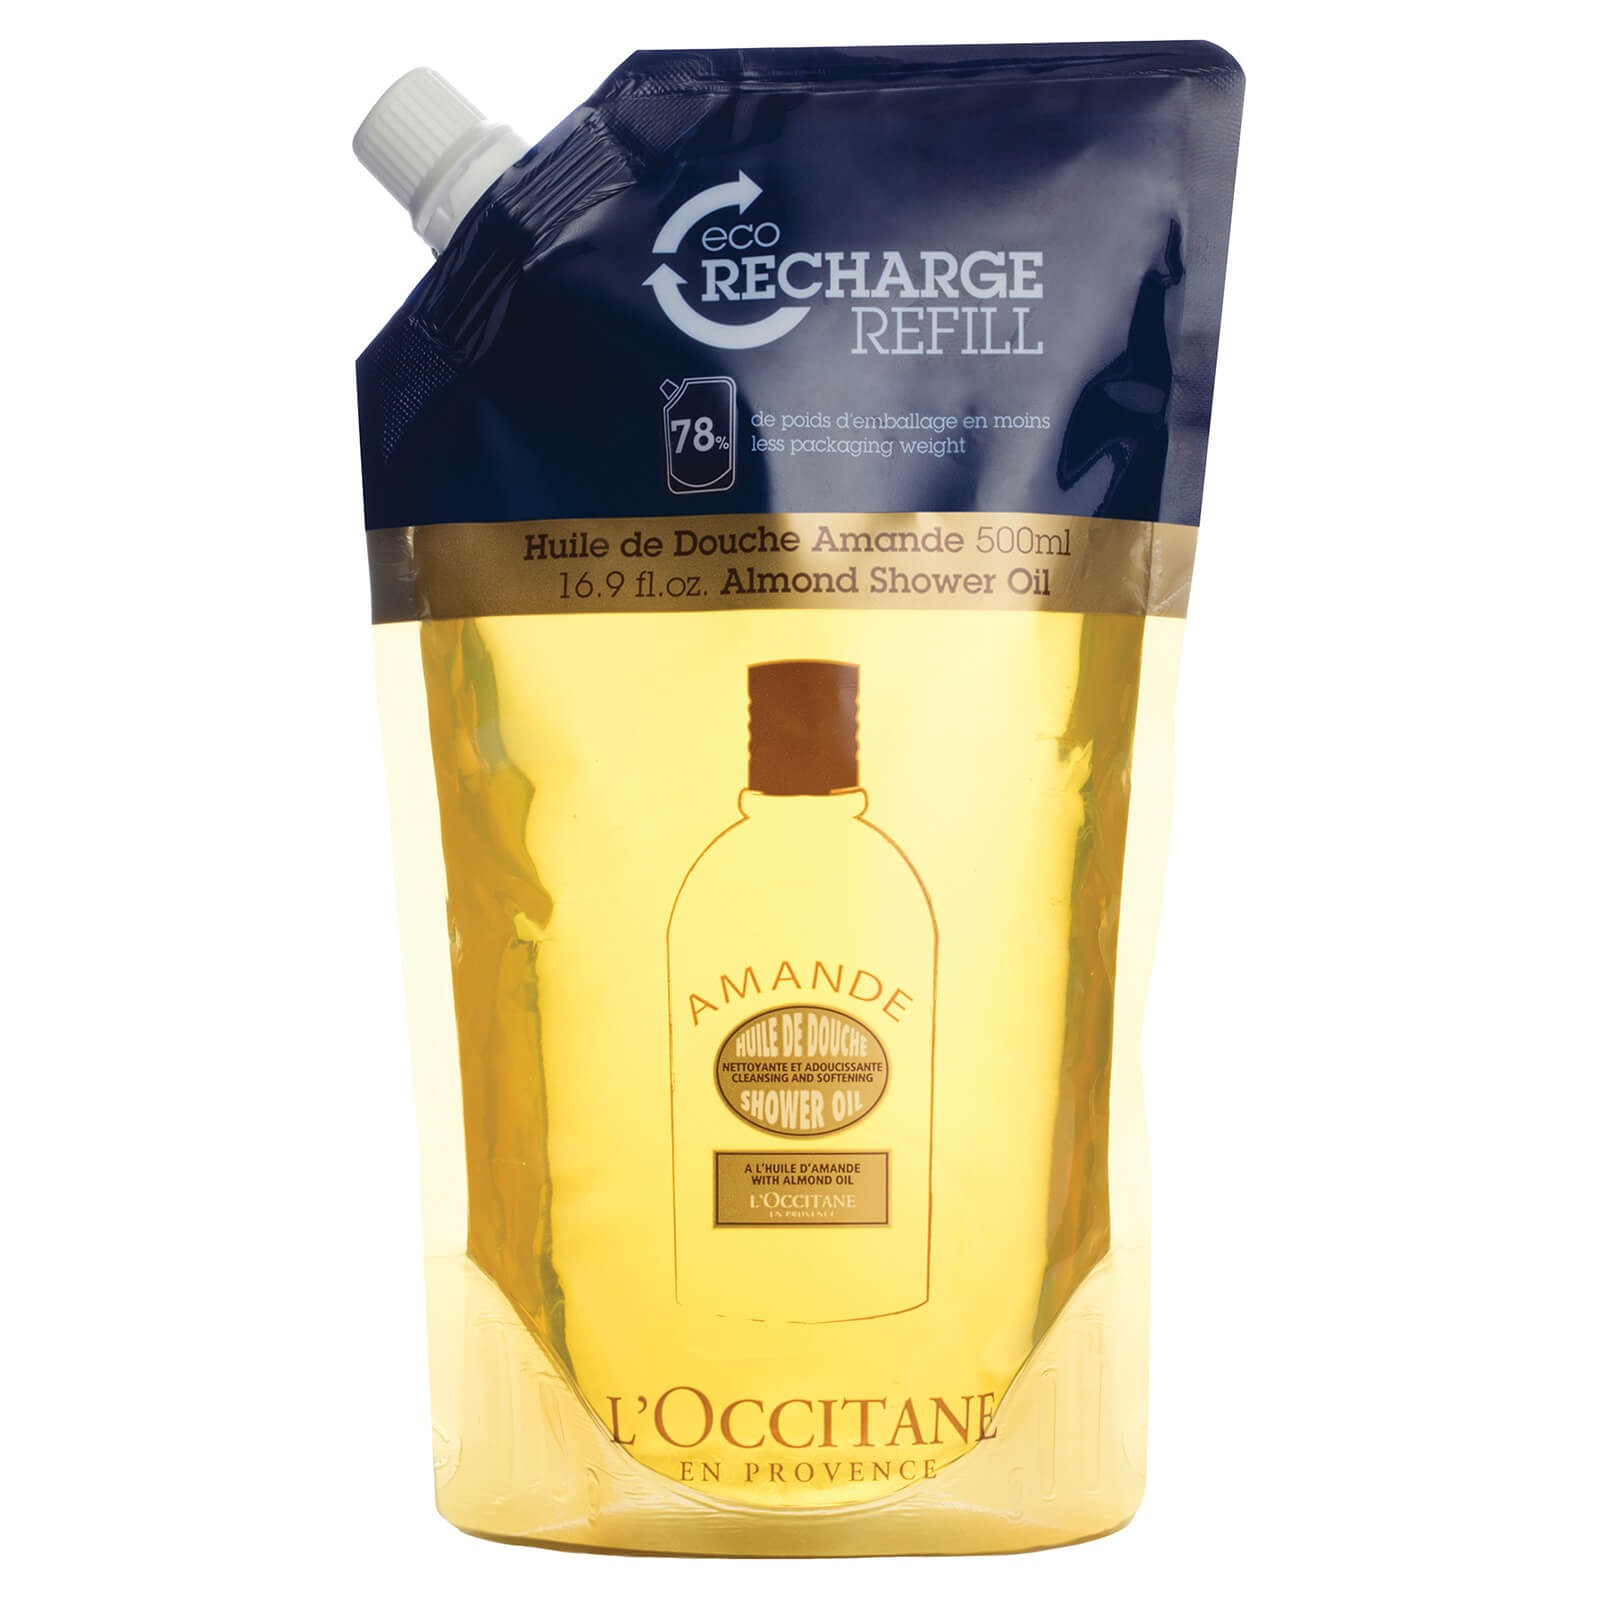 L'Occitane Almond Shower Oil Refill